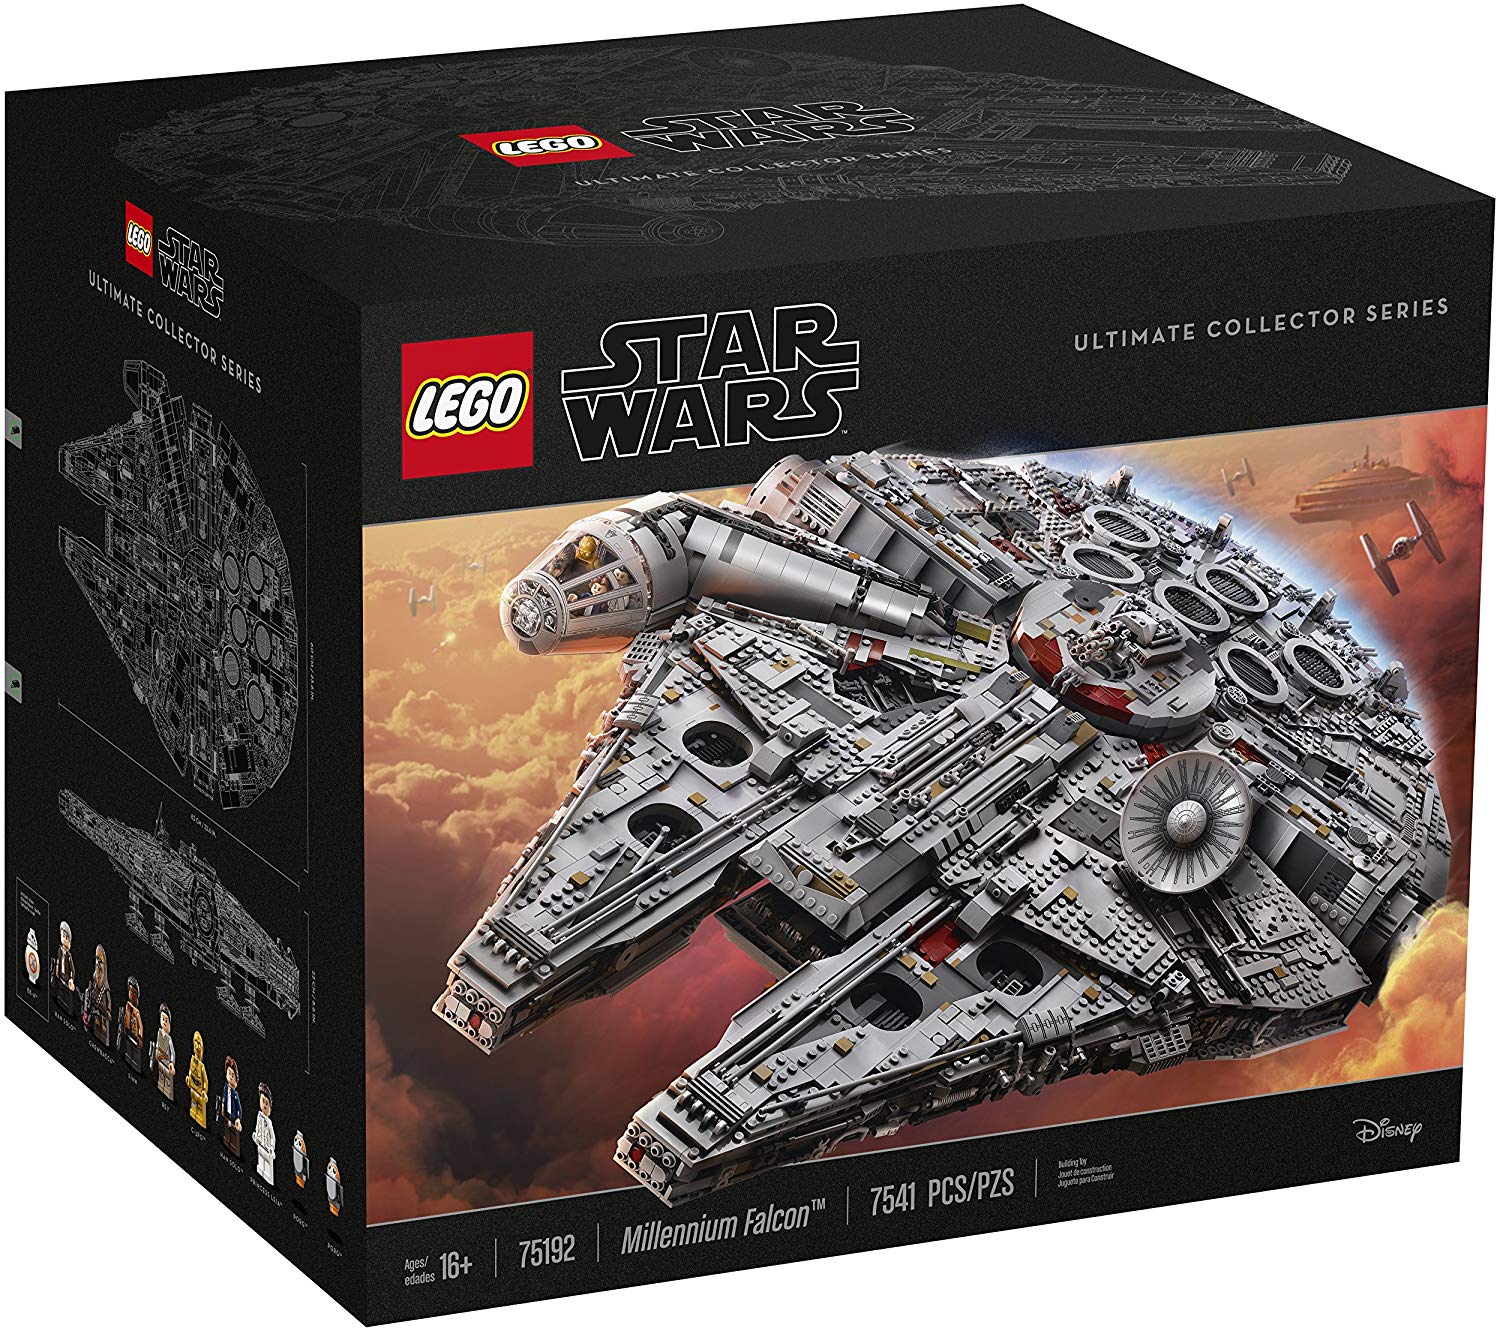 LEGO Star Wars UCS Millennium Falcon (75192) Amazon Black Friday 2019